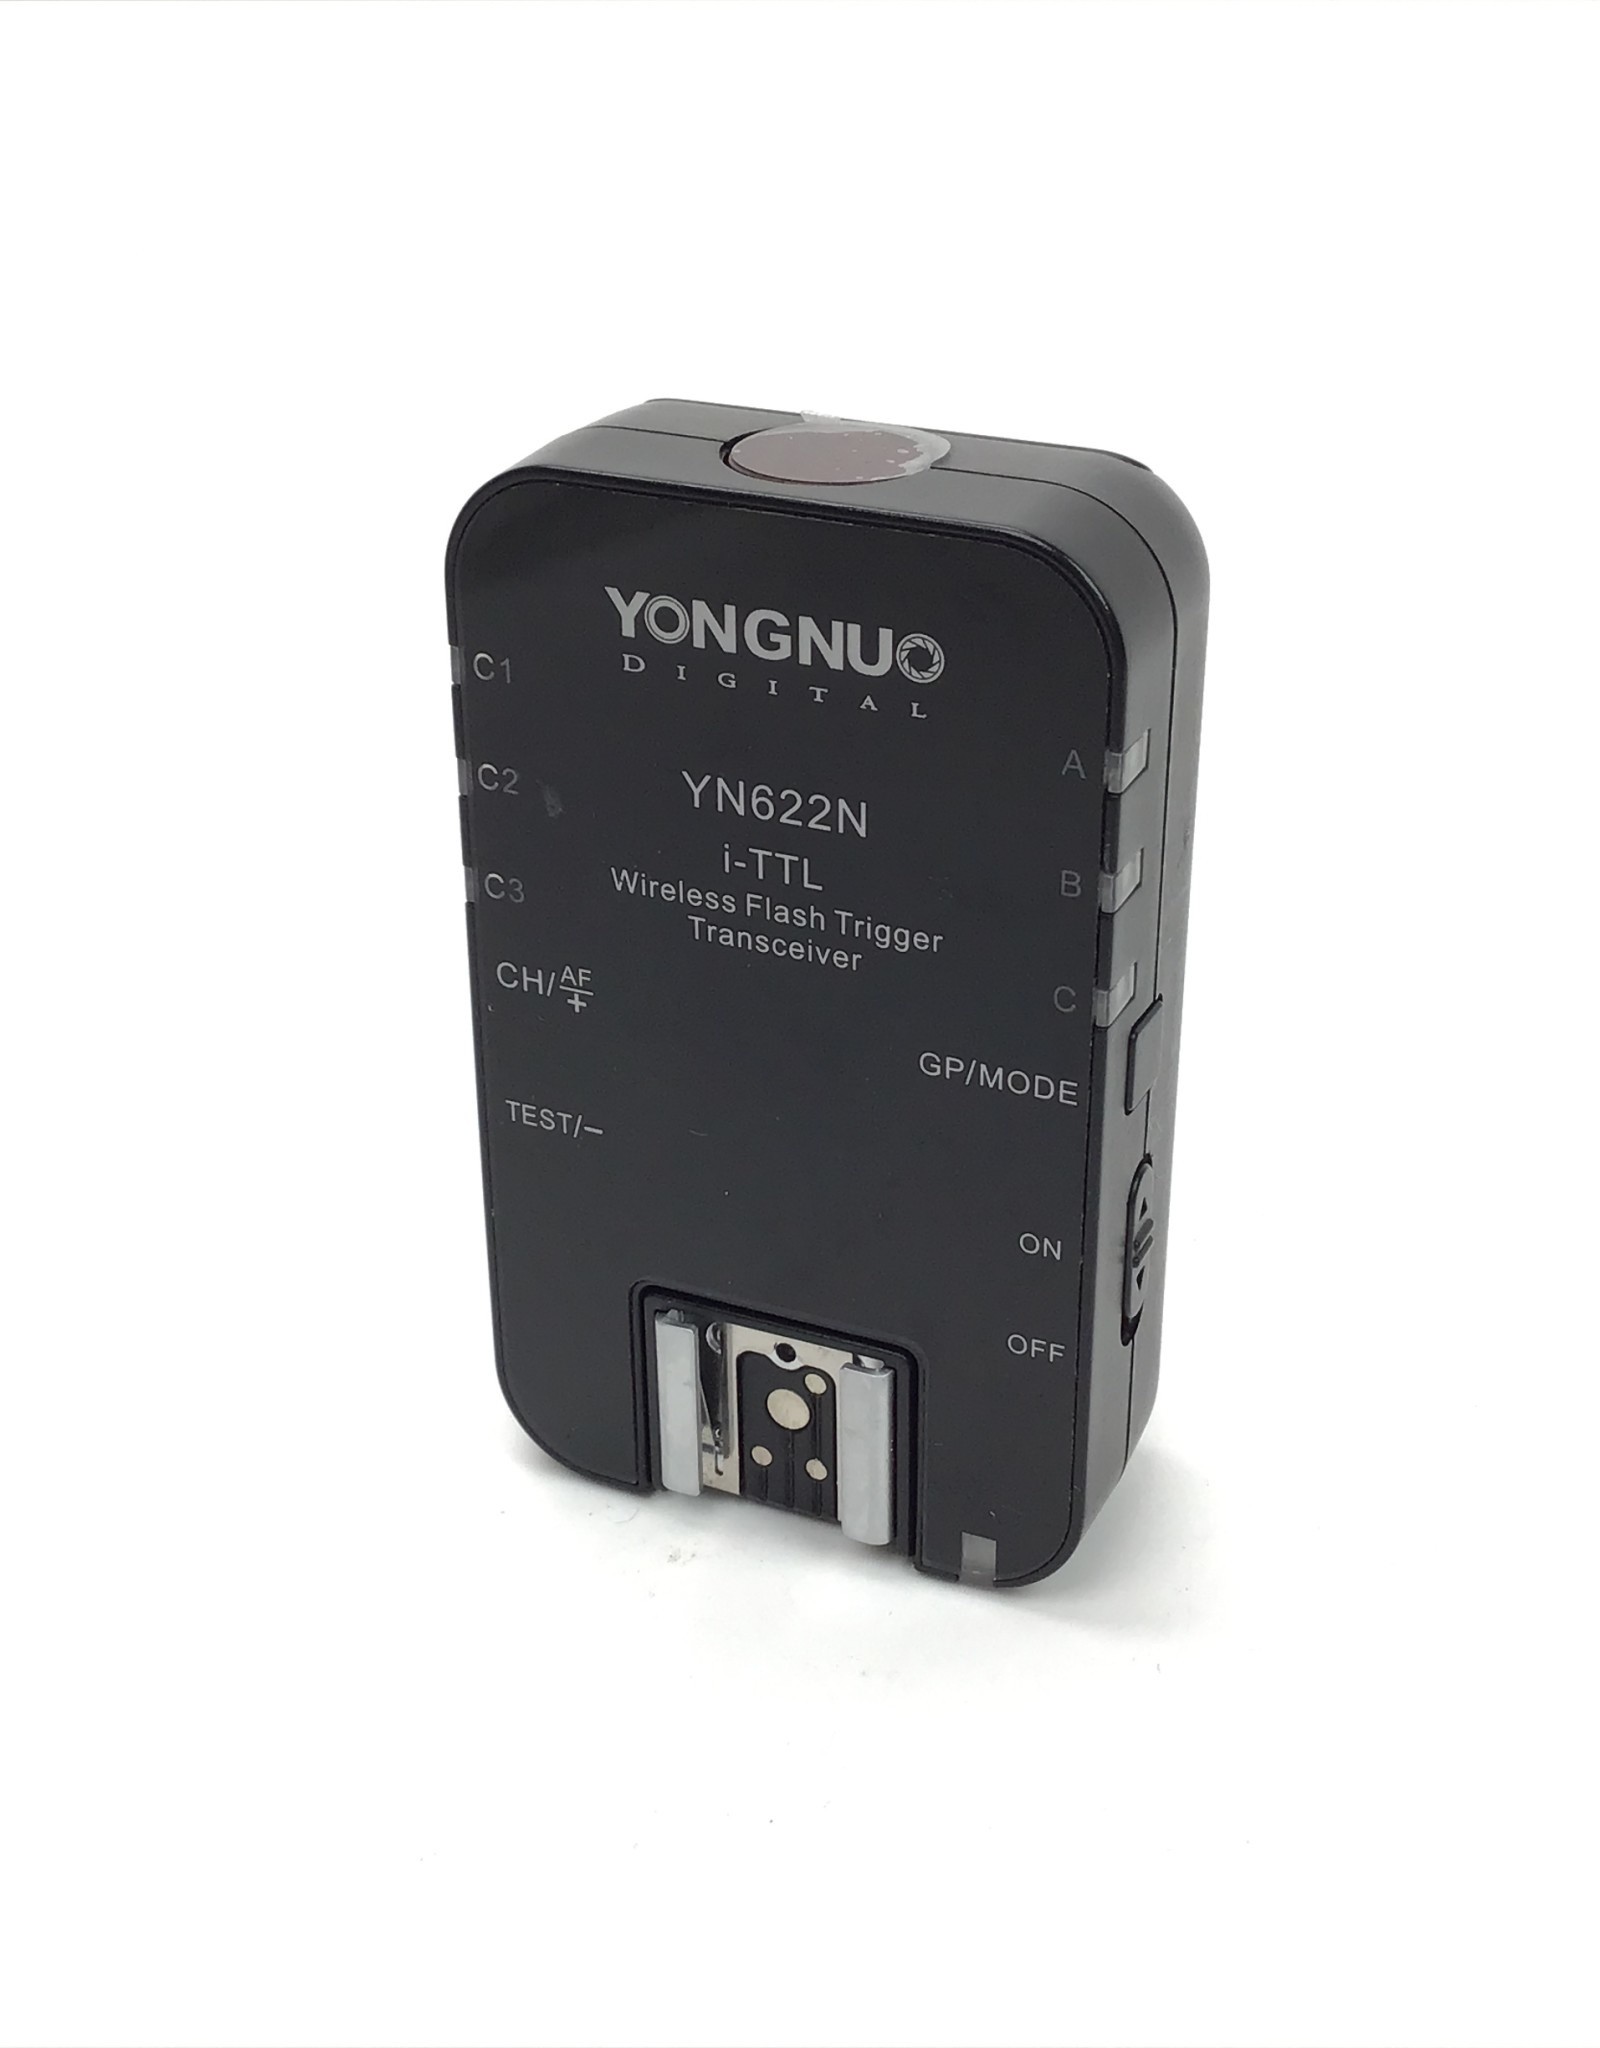 YONGNUO Yongnuo YN622N Wireless Flash Transceiver for Nikon Used Fair